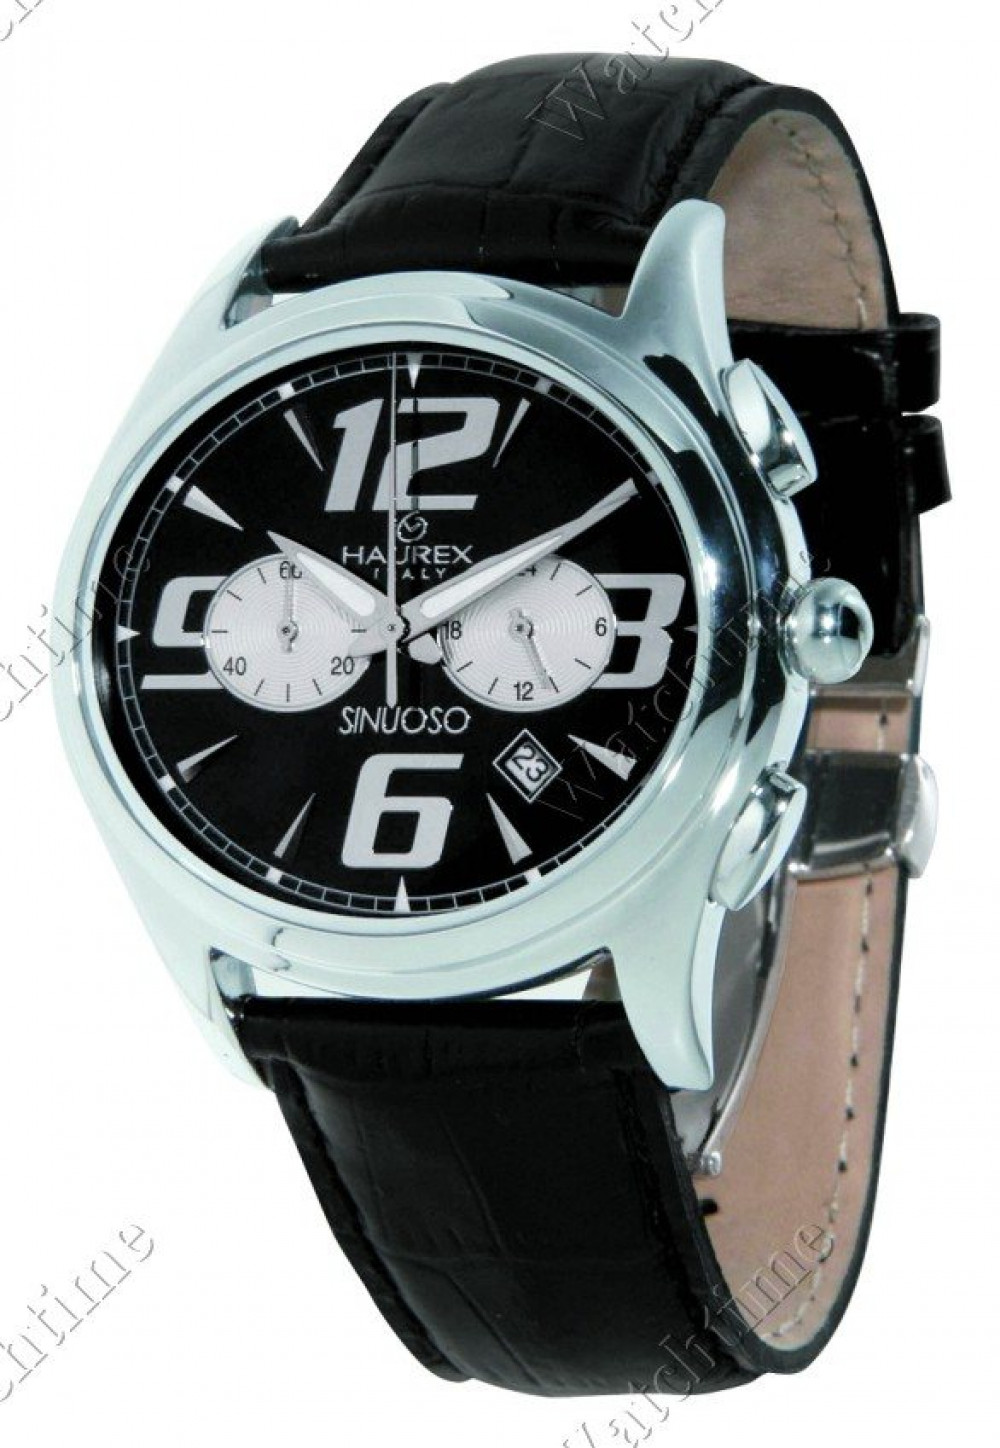 Zegarek firmy Haurex, model Sinuoso